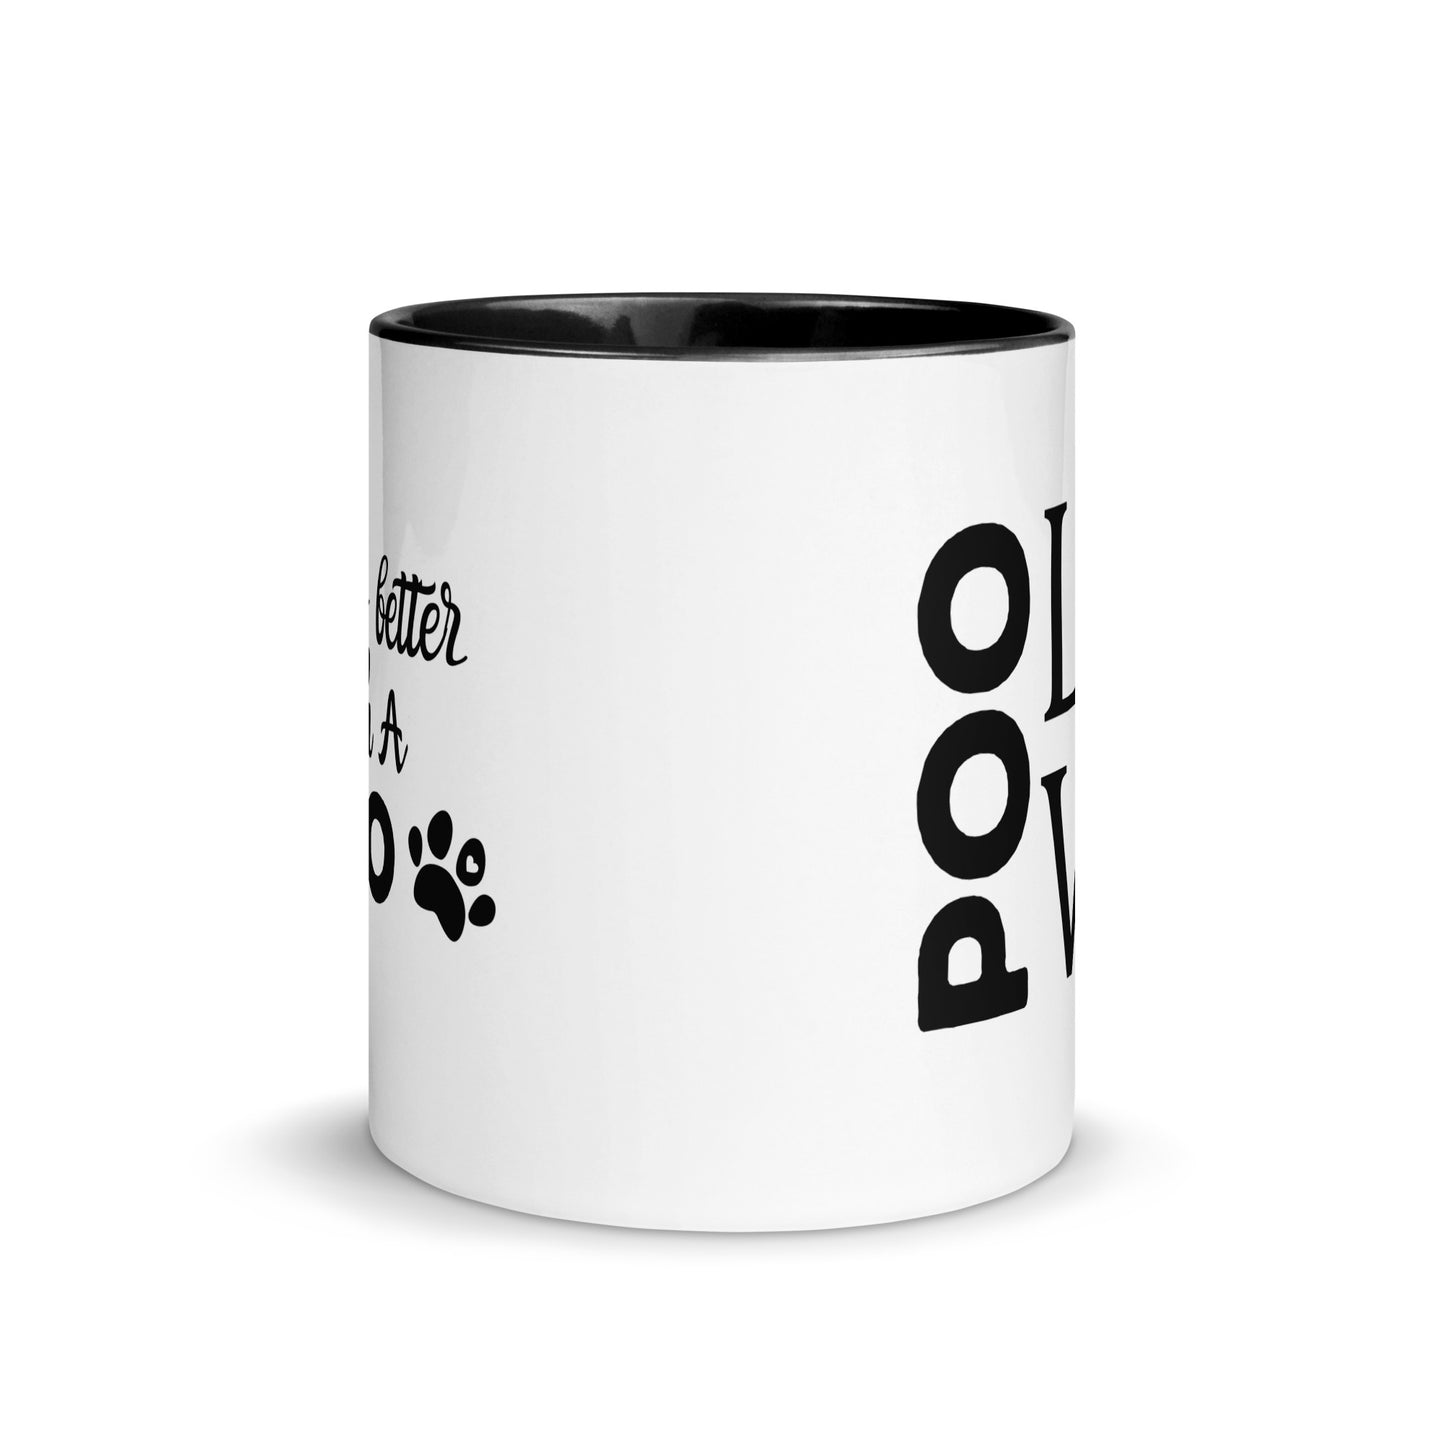 "Poo Love 2" mug with black inside